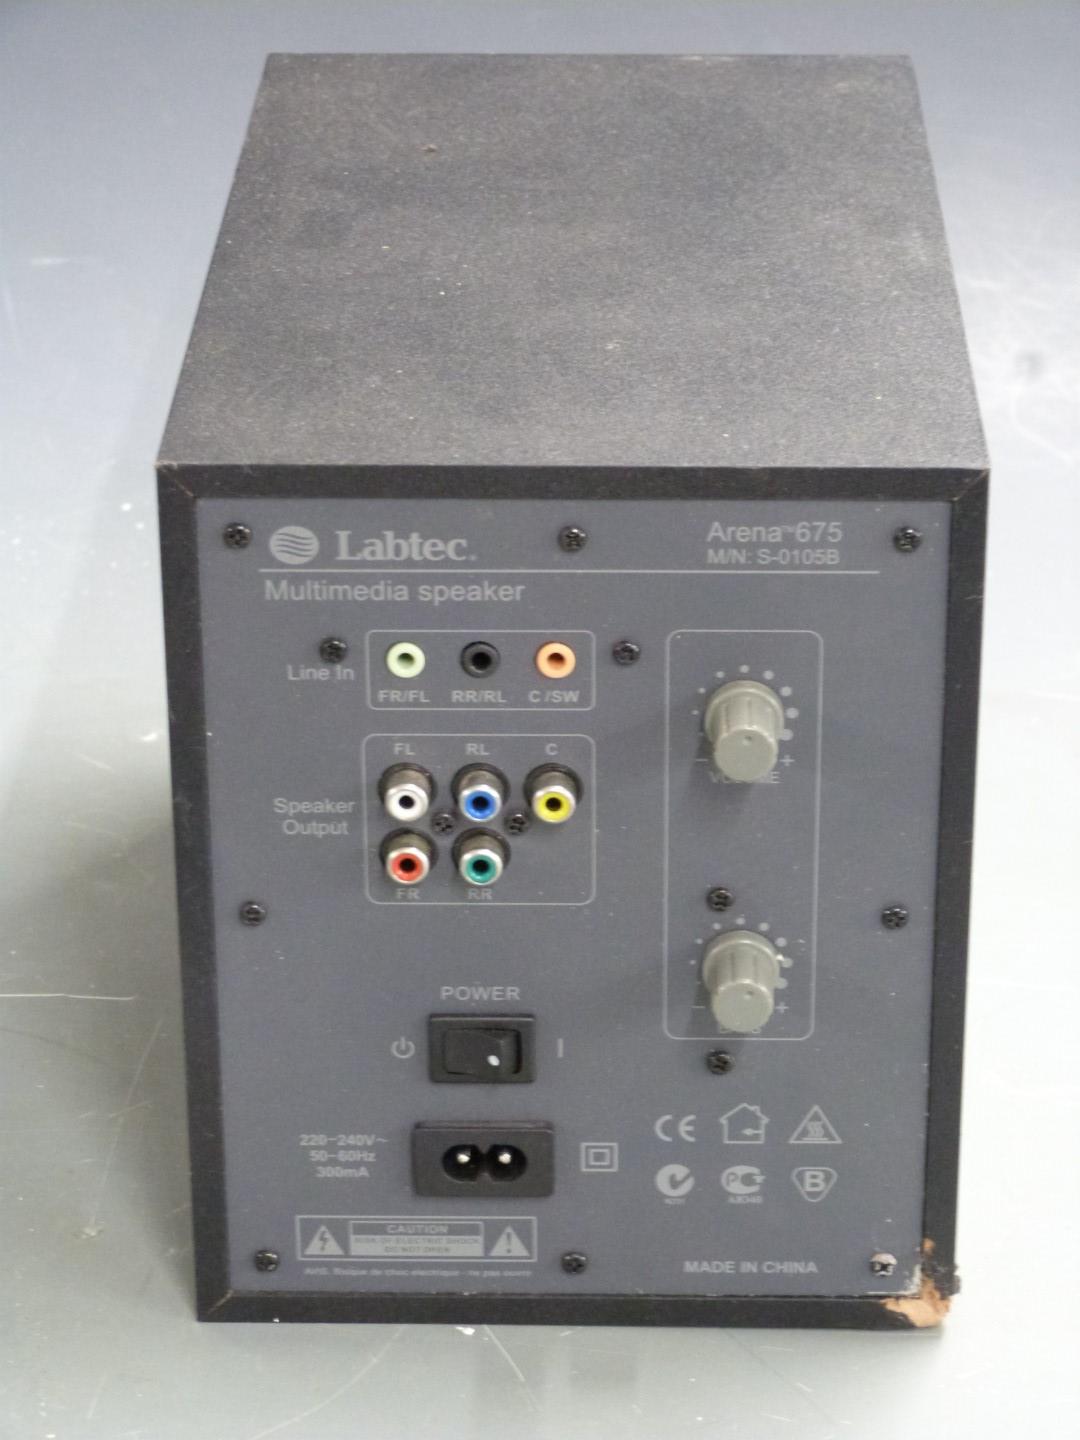 Labtec surround digital surround speaker system, Arena 675, MN:S-0105B - Image 2 of 2